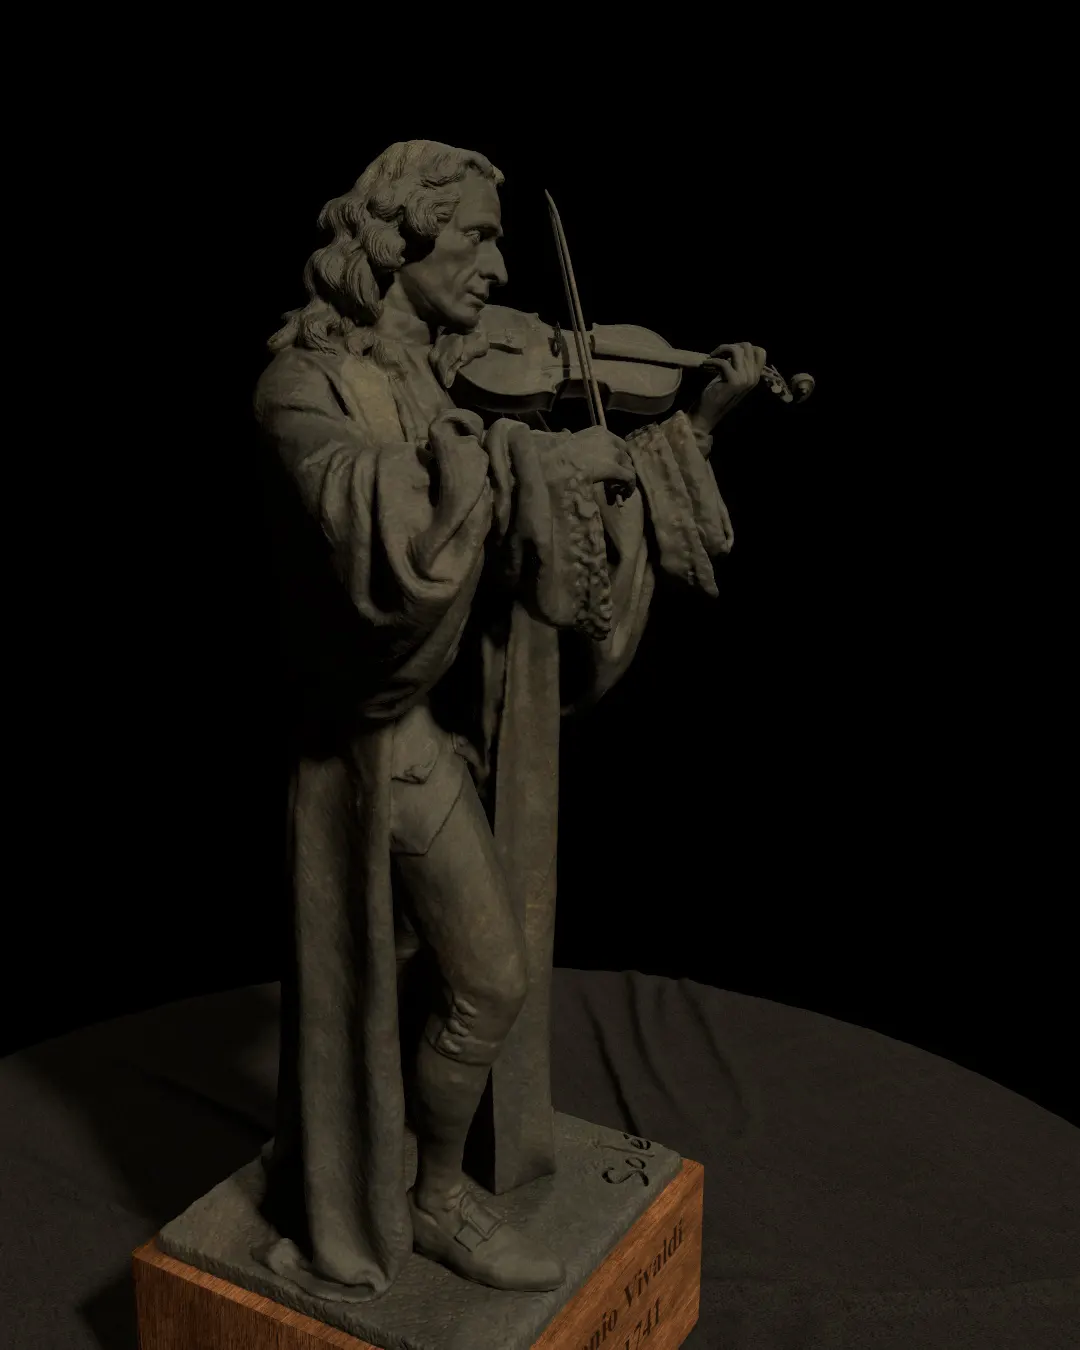 Antonio-Vivaldi-statue/Rendering-of-Antonio-Vivaldi-statue-modeled-by-Emil-Sole-7.webp